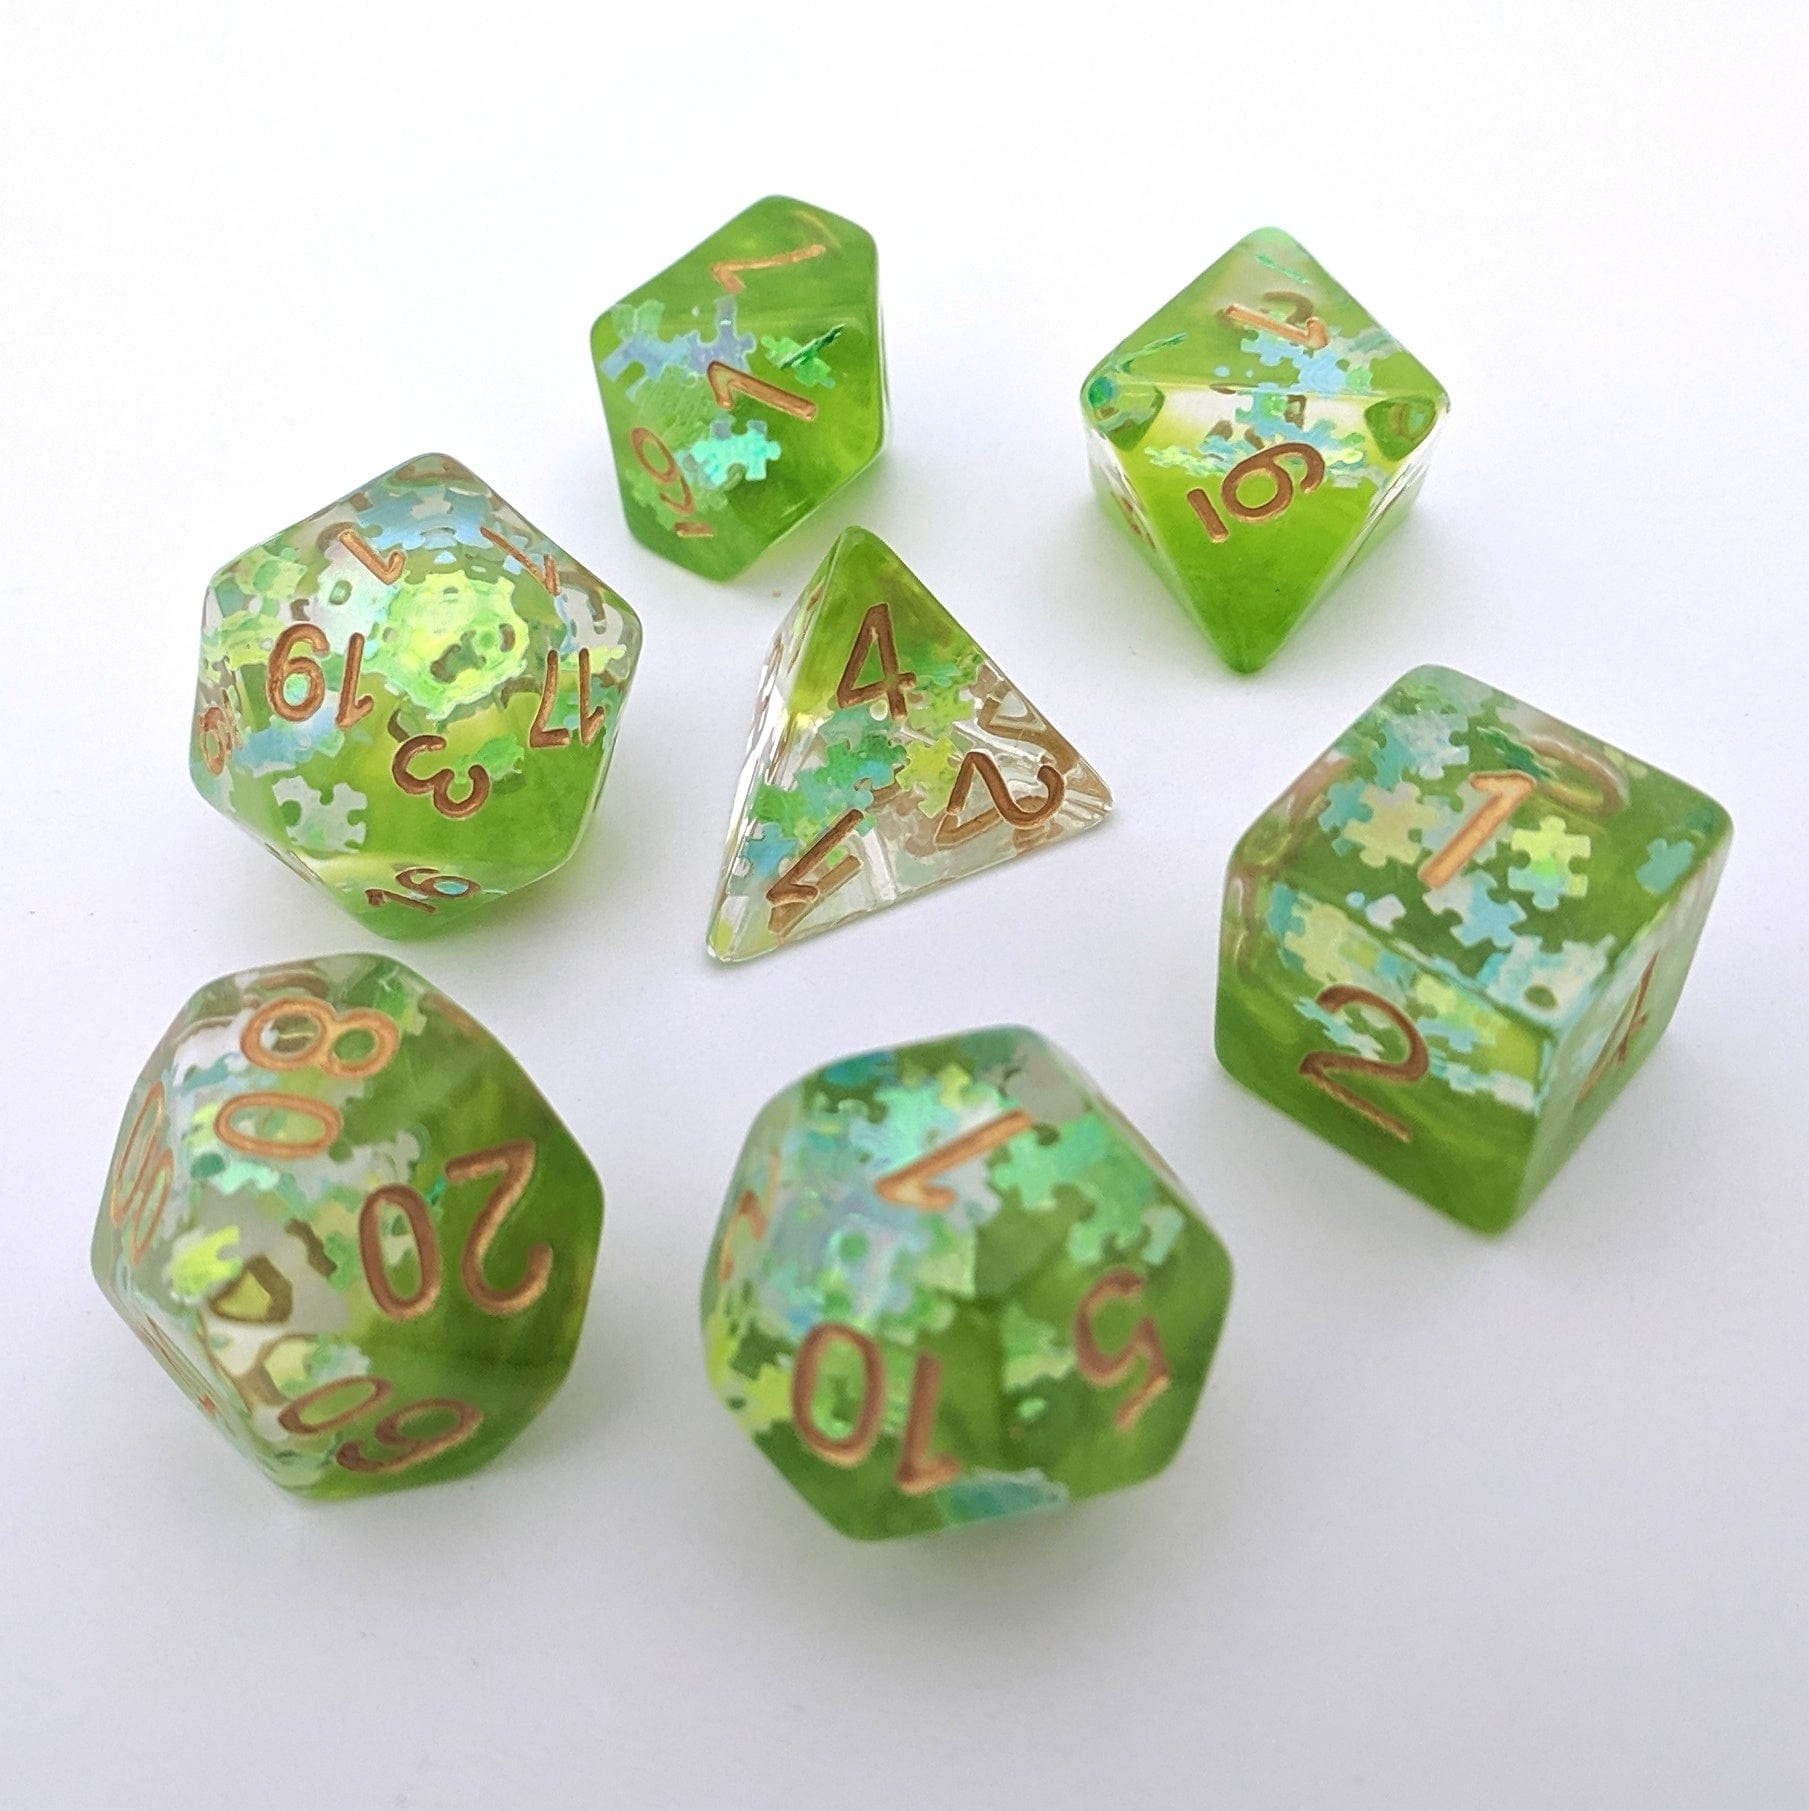 Elven Riddle DnD Dice Set, Green Translucent Glitter Dice - CozyGamer